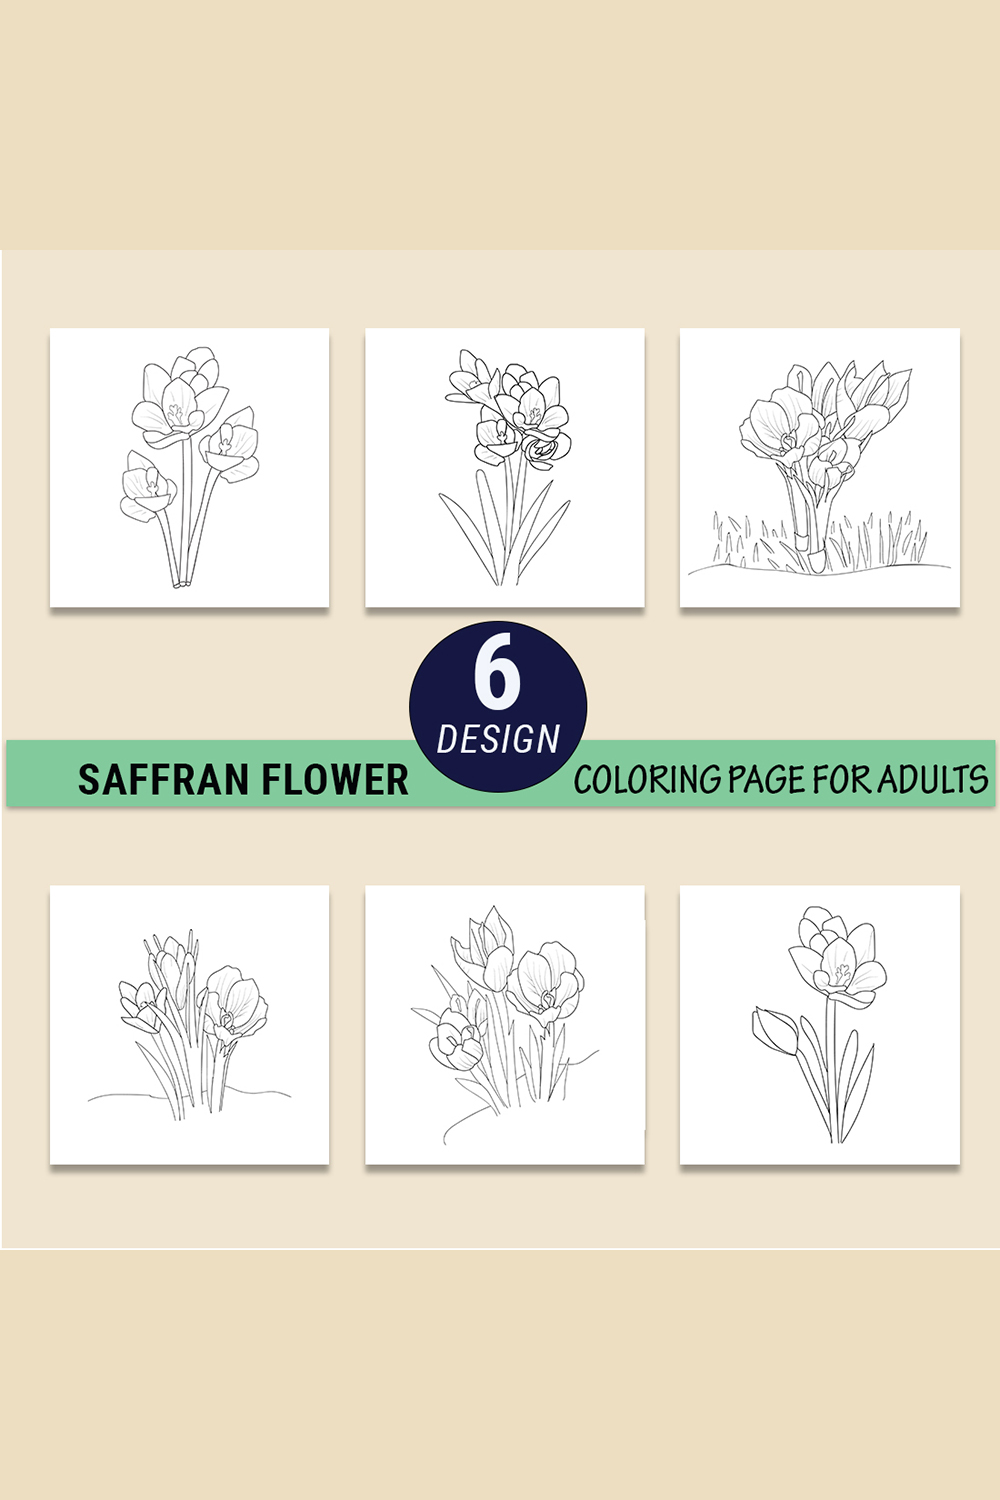 saffron crosses flower outline, crocus flower coloring pages crocus flower spring, sketch crocus flower drawing pinterest preview image.